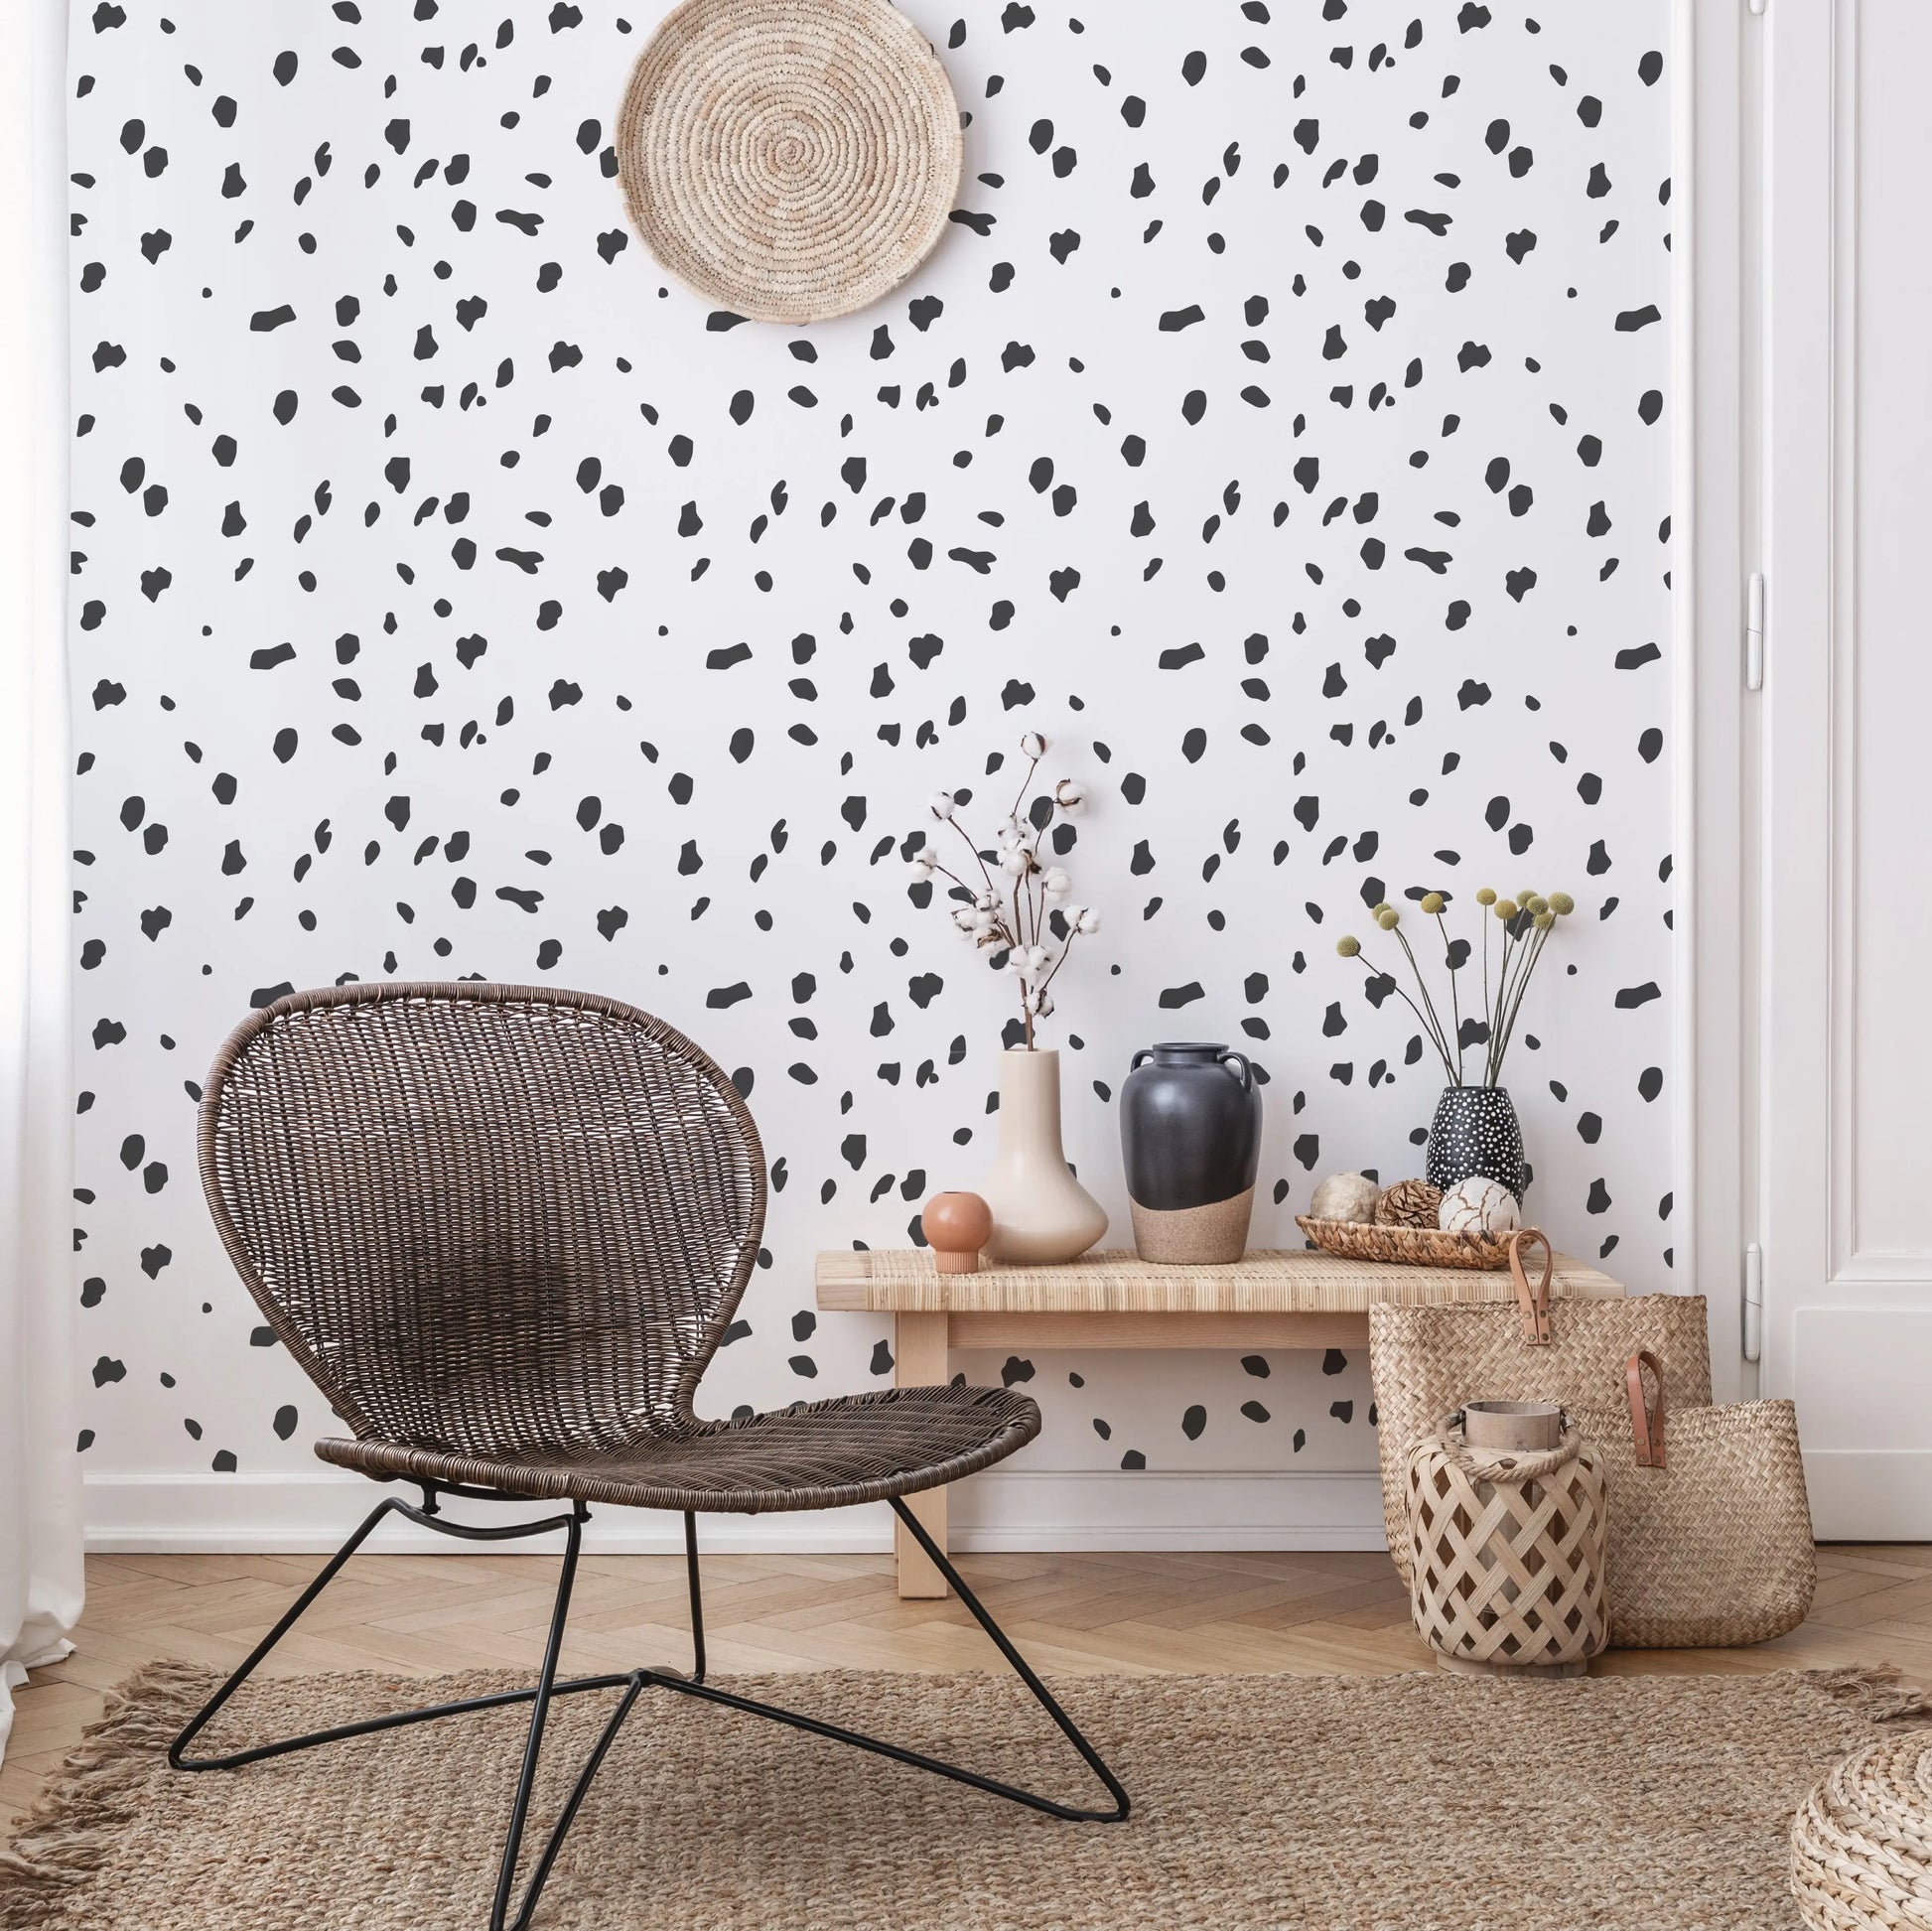 Stencil Dalmatian Print Wall and Furniture Stencil Dizzy Duck Designs